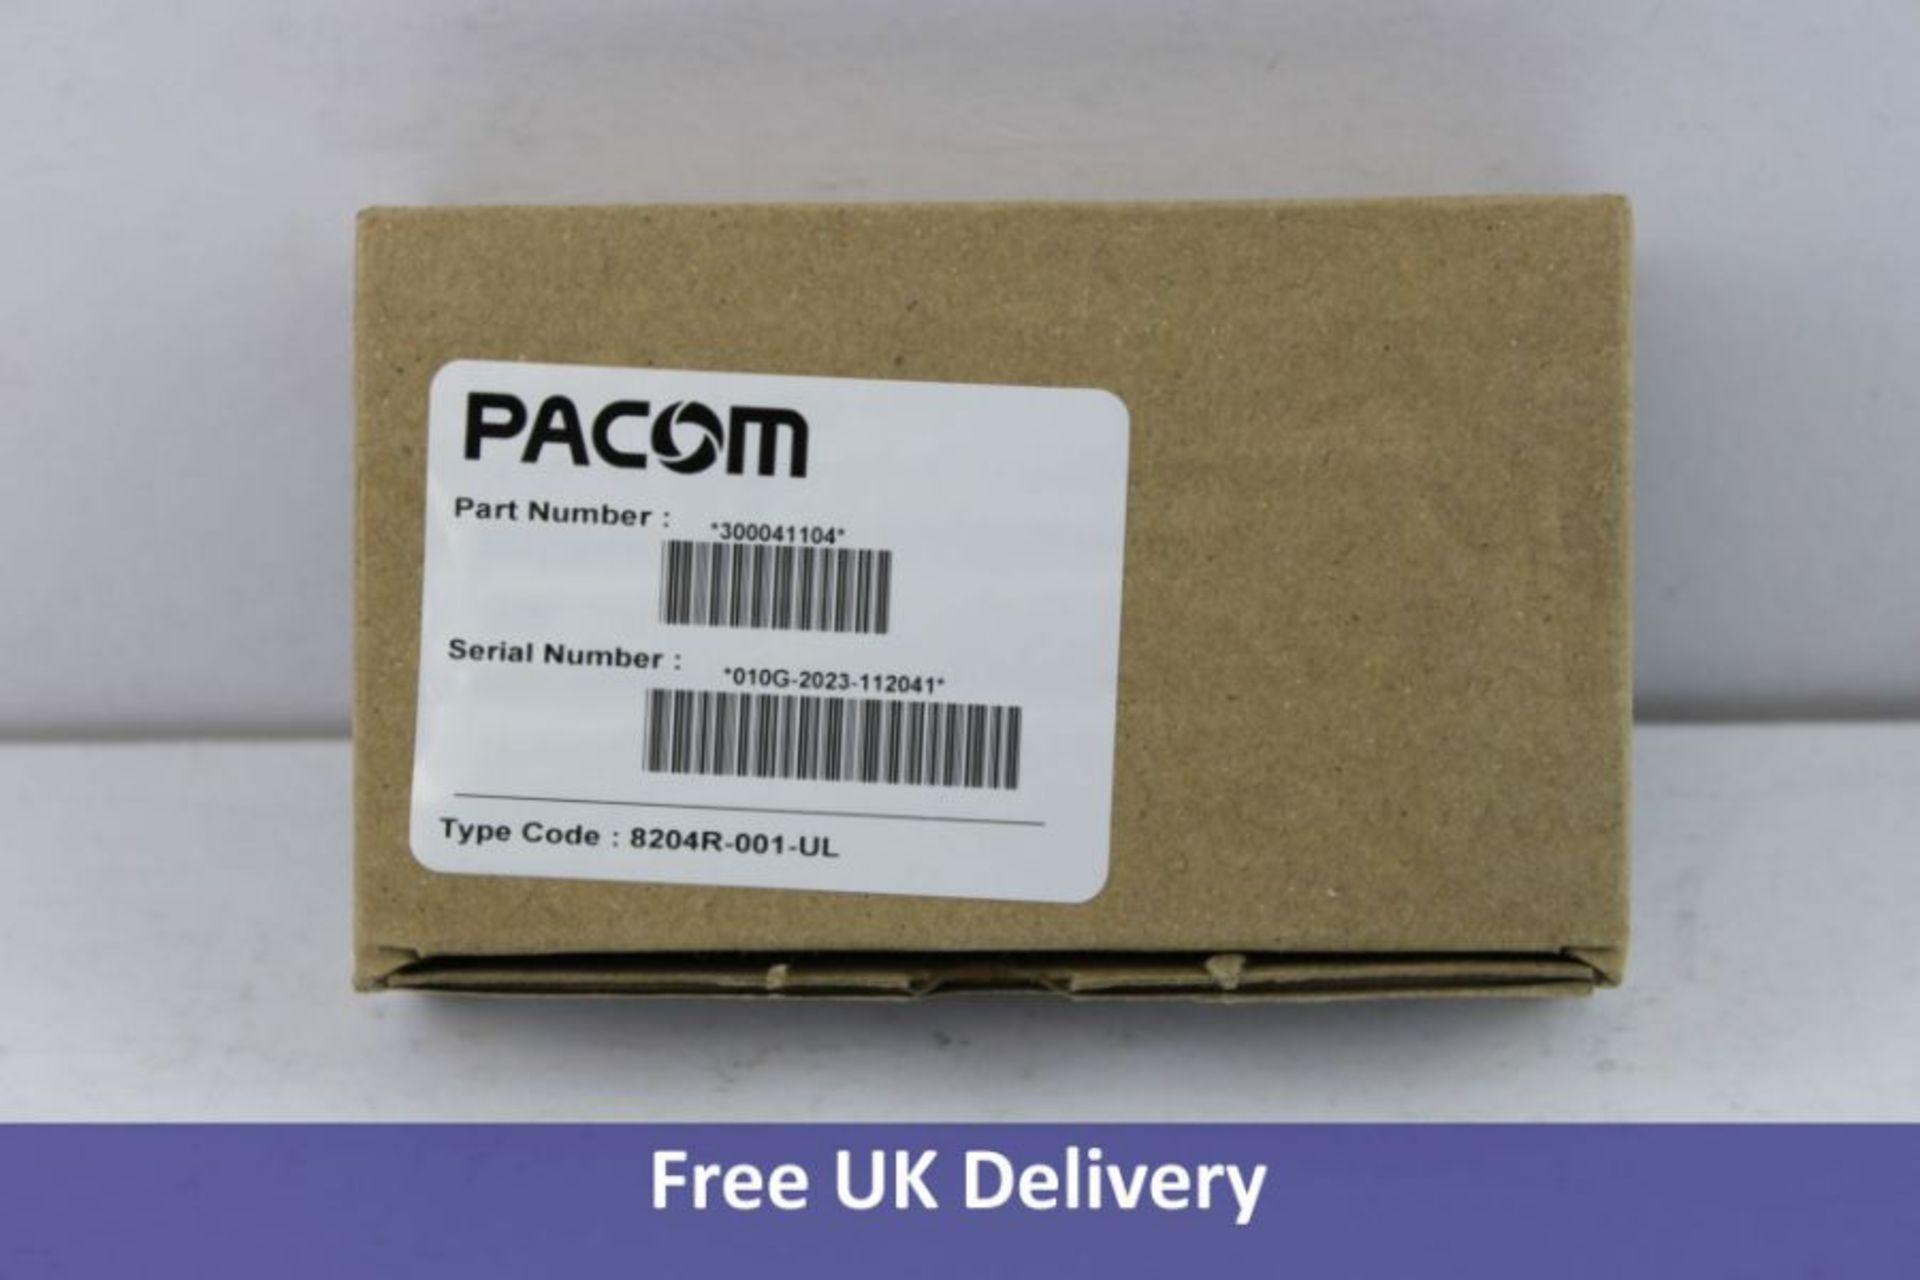 Pacom Input Expansion Card 8204R-001-UL